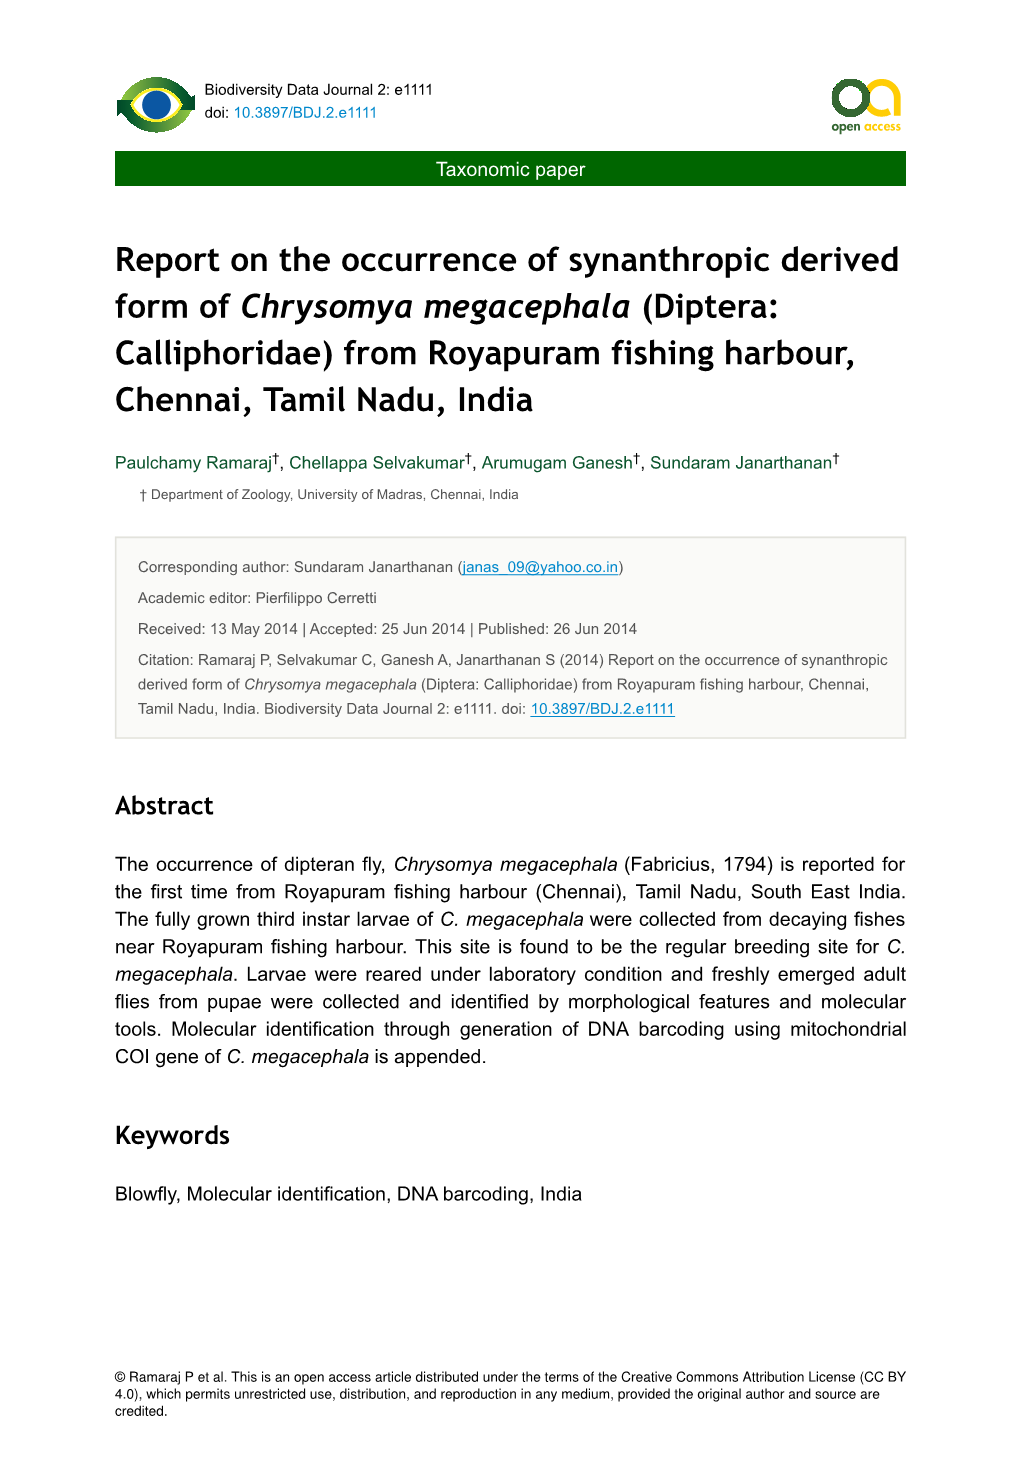 Report on the Occurrence of Synanthropic Derived Form of Chrysomya Megacephala (Diptera: Calliphoridae) from Royapuram Fishing Harbour, Chennai, Tamil Nadu, India